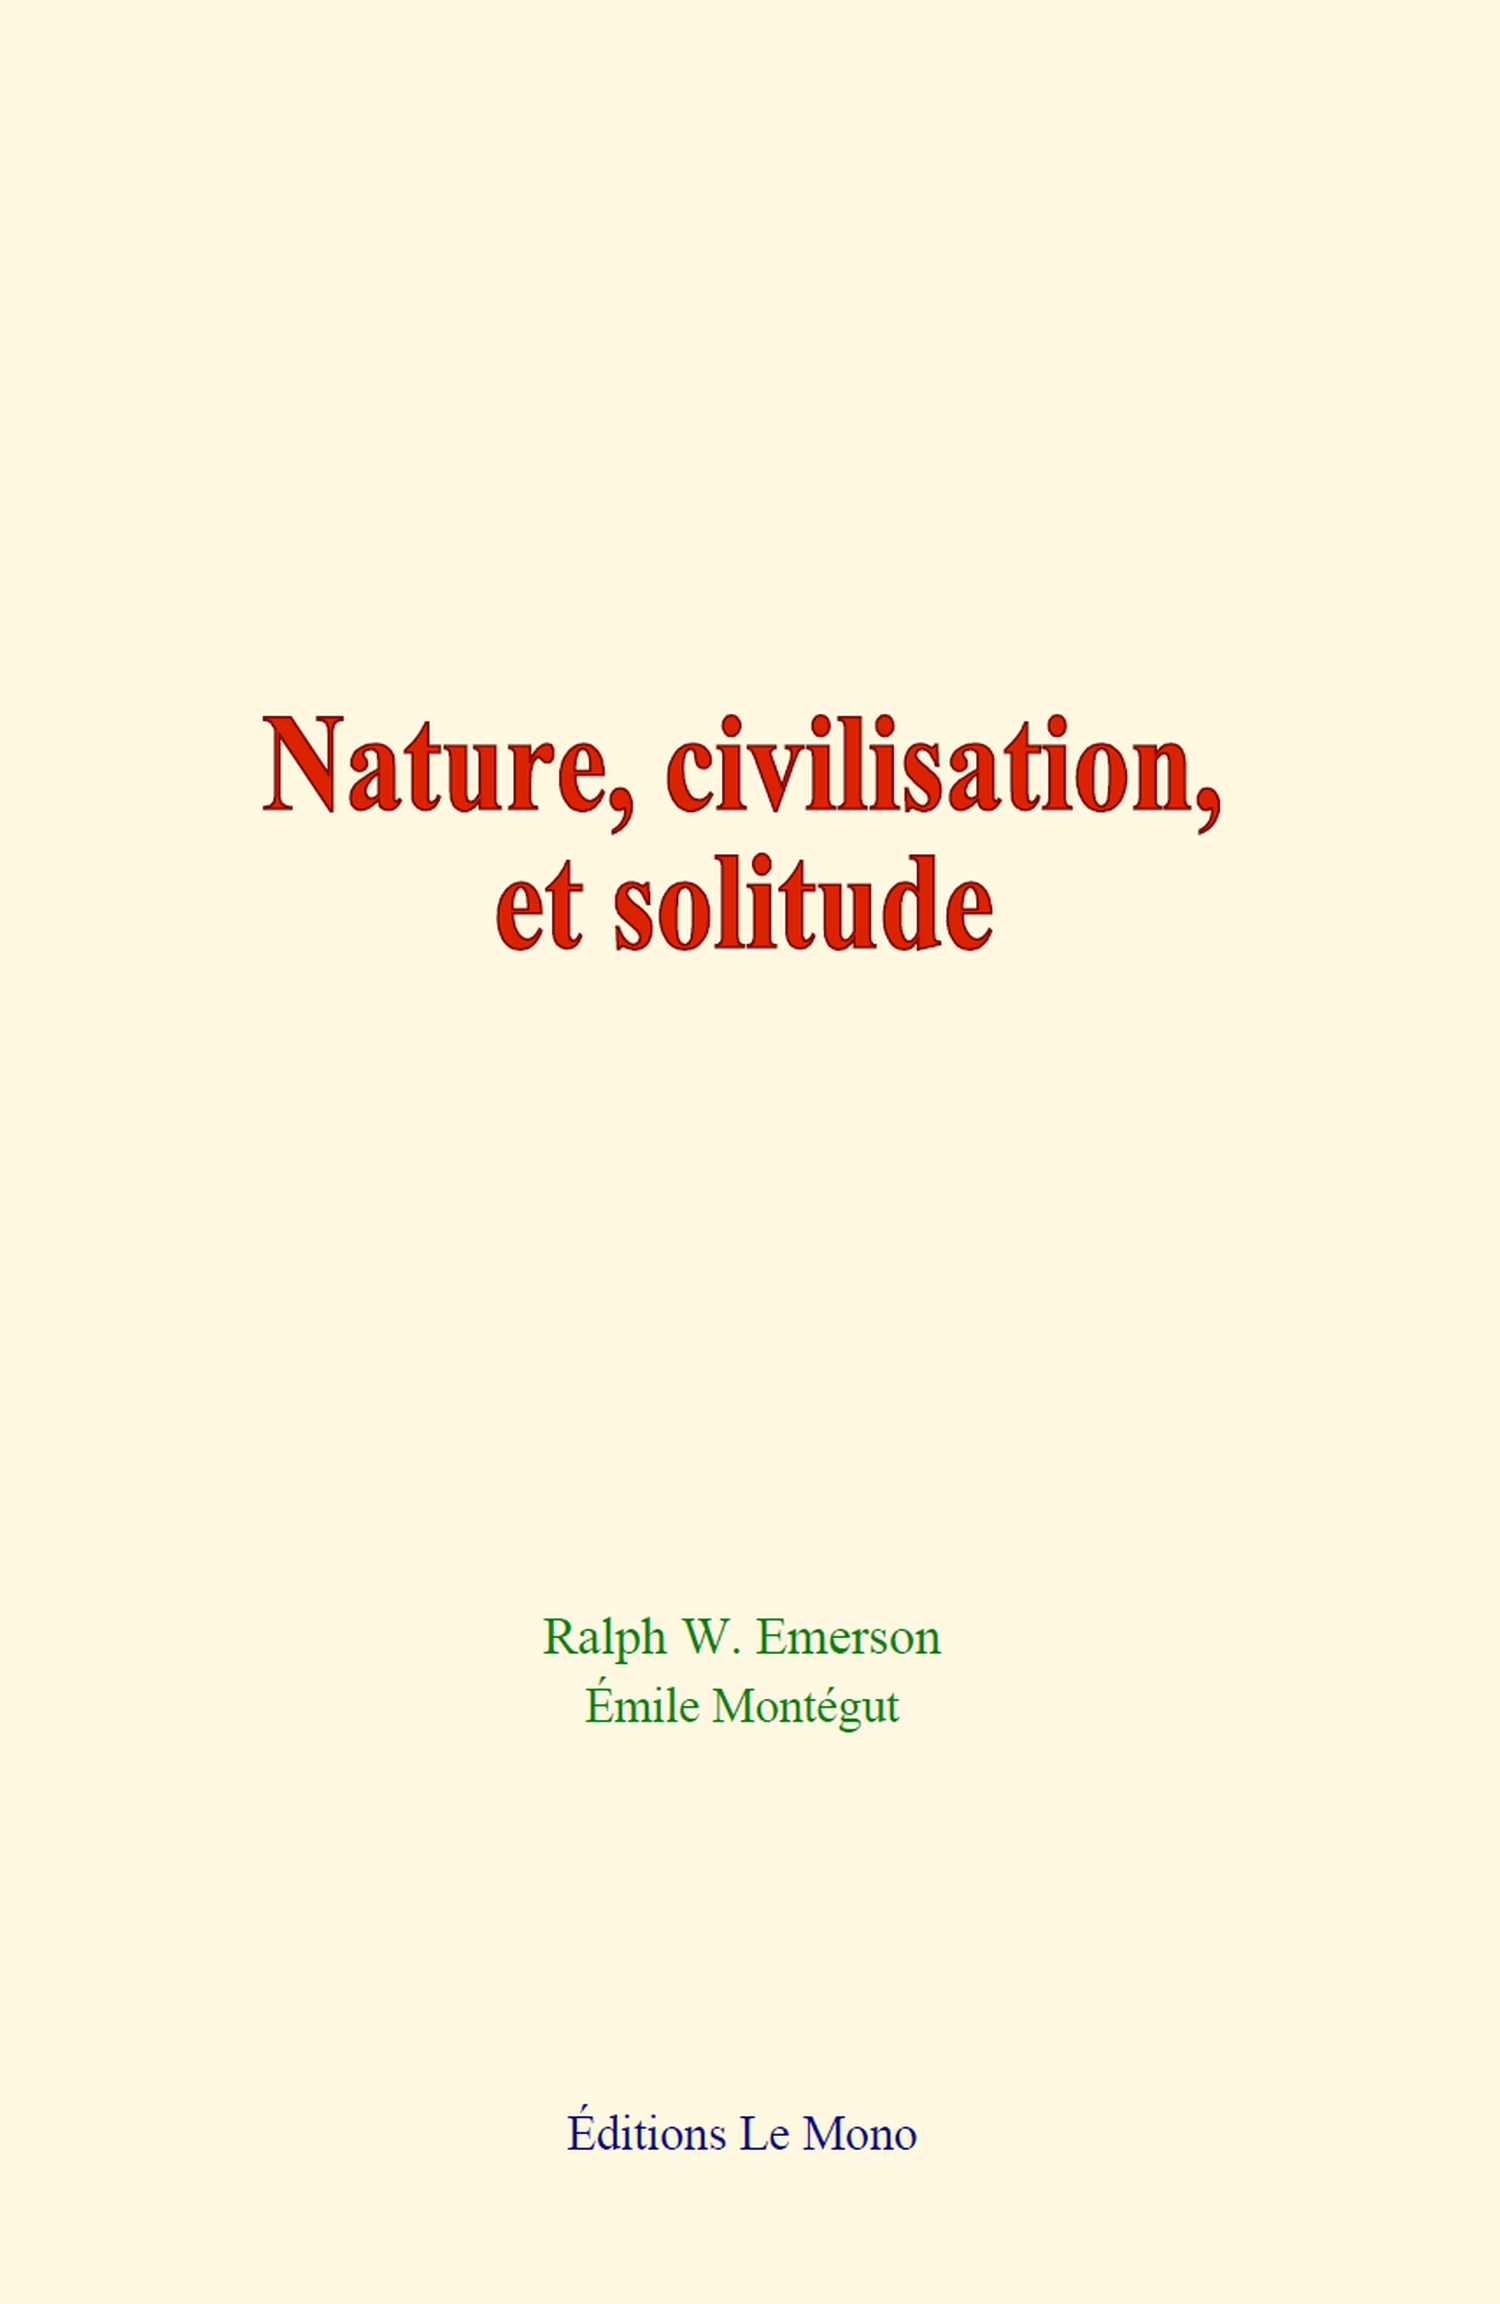 Nature, civilisation et solitude